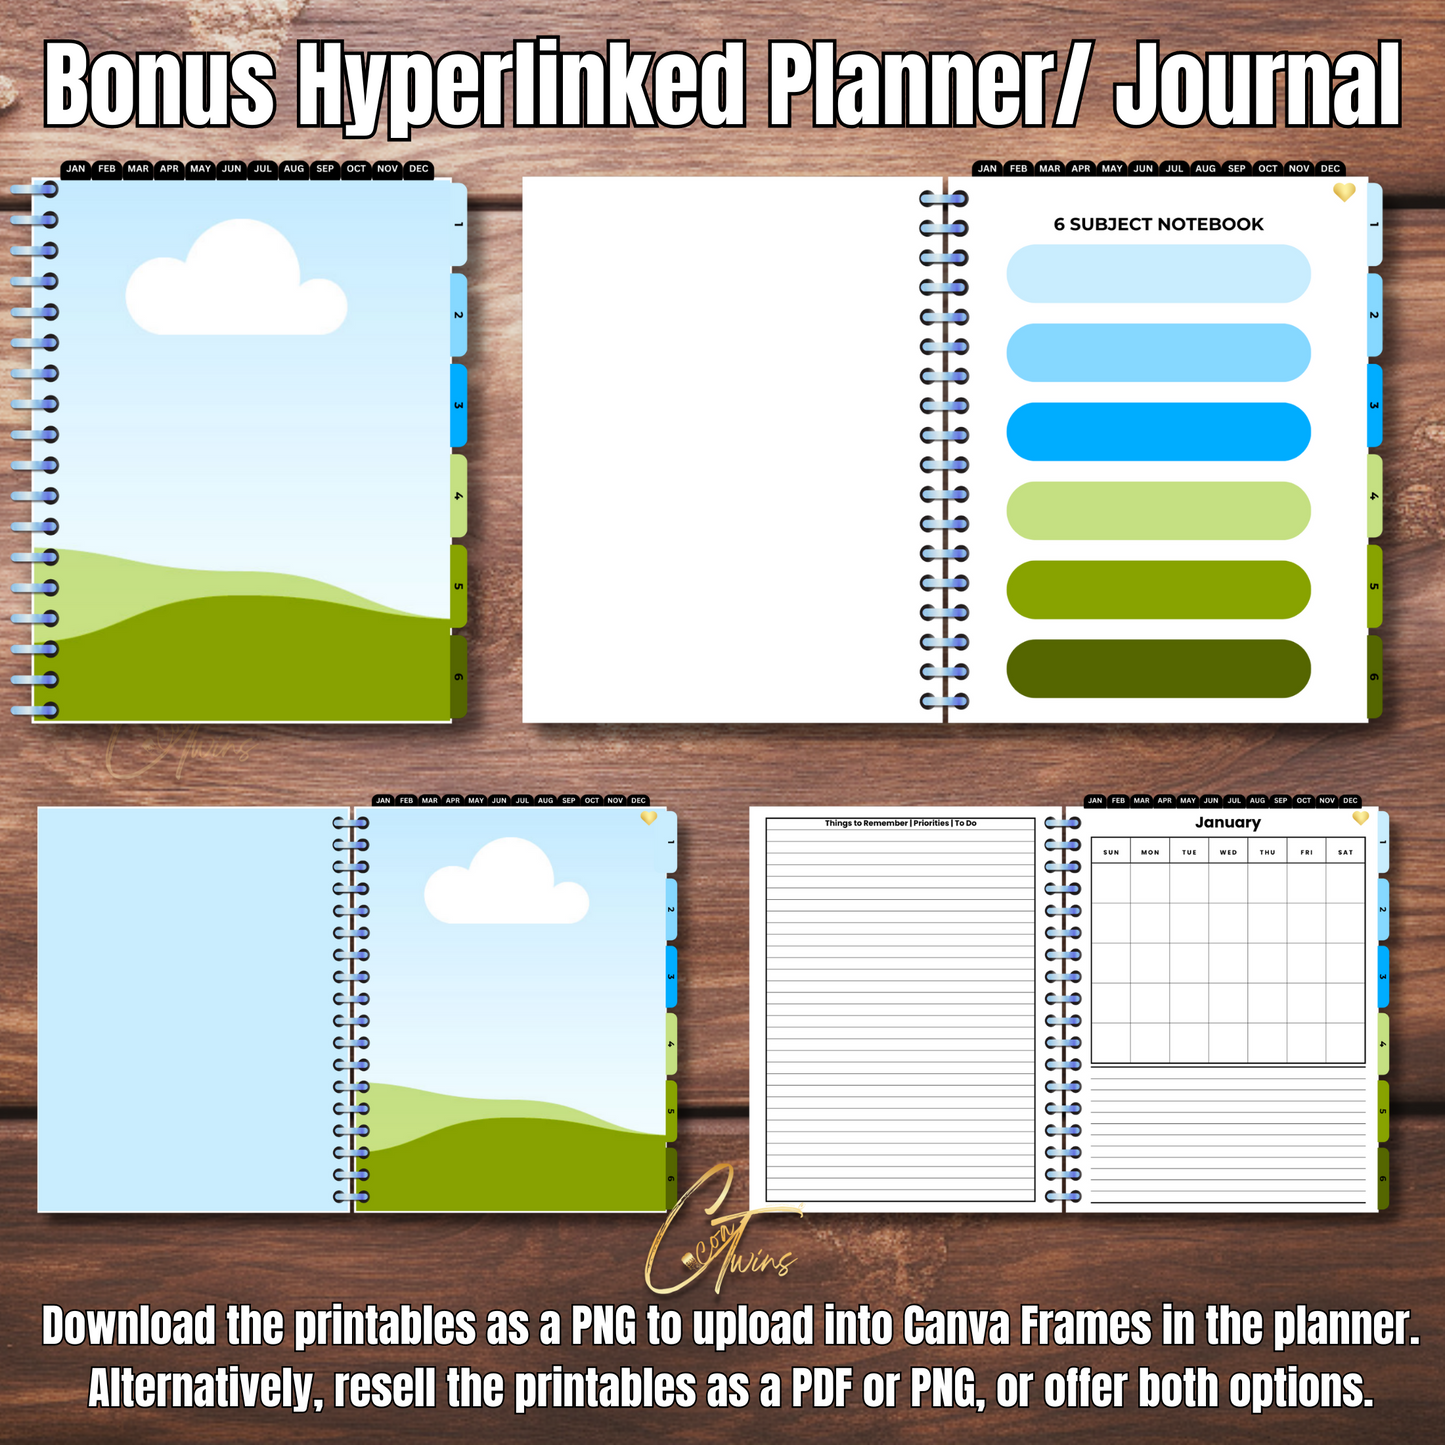 Beautiful Bouquet | Editable Journal PLR Kit with a Bonus Hyperlinked Planner | Fully Editable Canva Templates